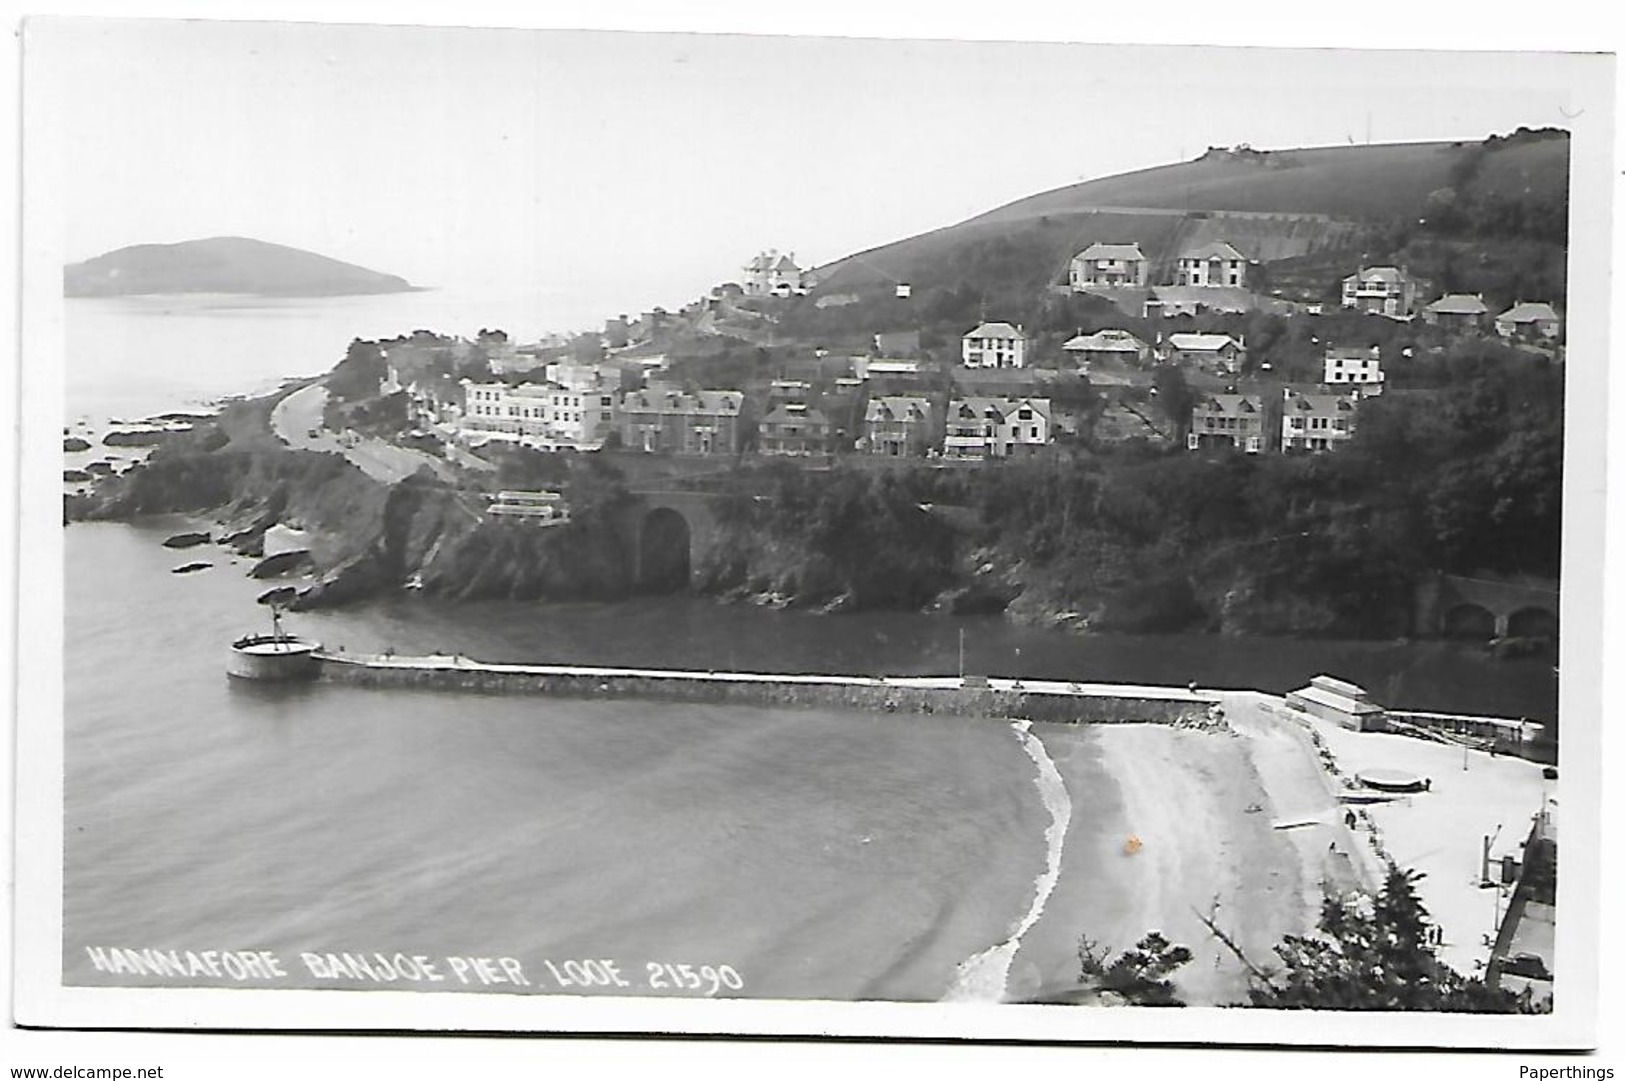 Real Photo Postcard, Looe Cornwall, Hannafore Banjoe Pier, Seaside Scene, Houses. - Ventnor